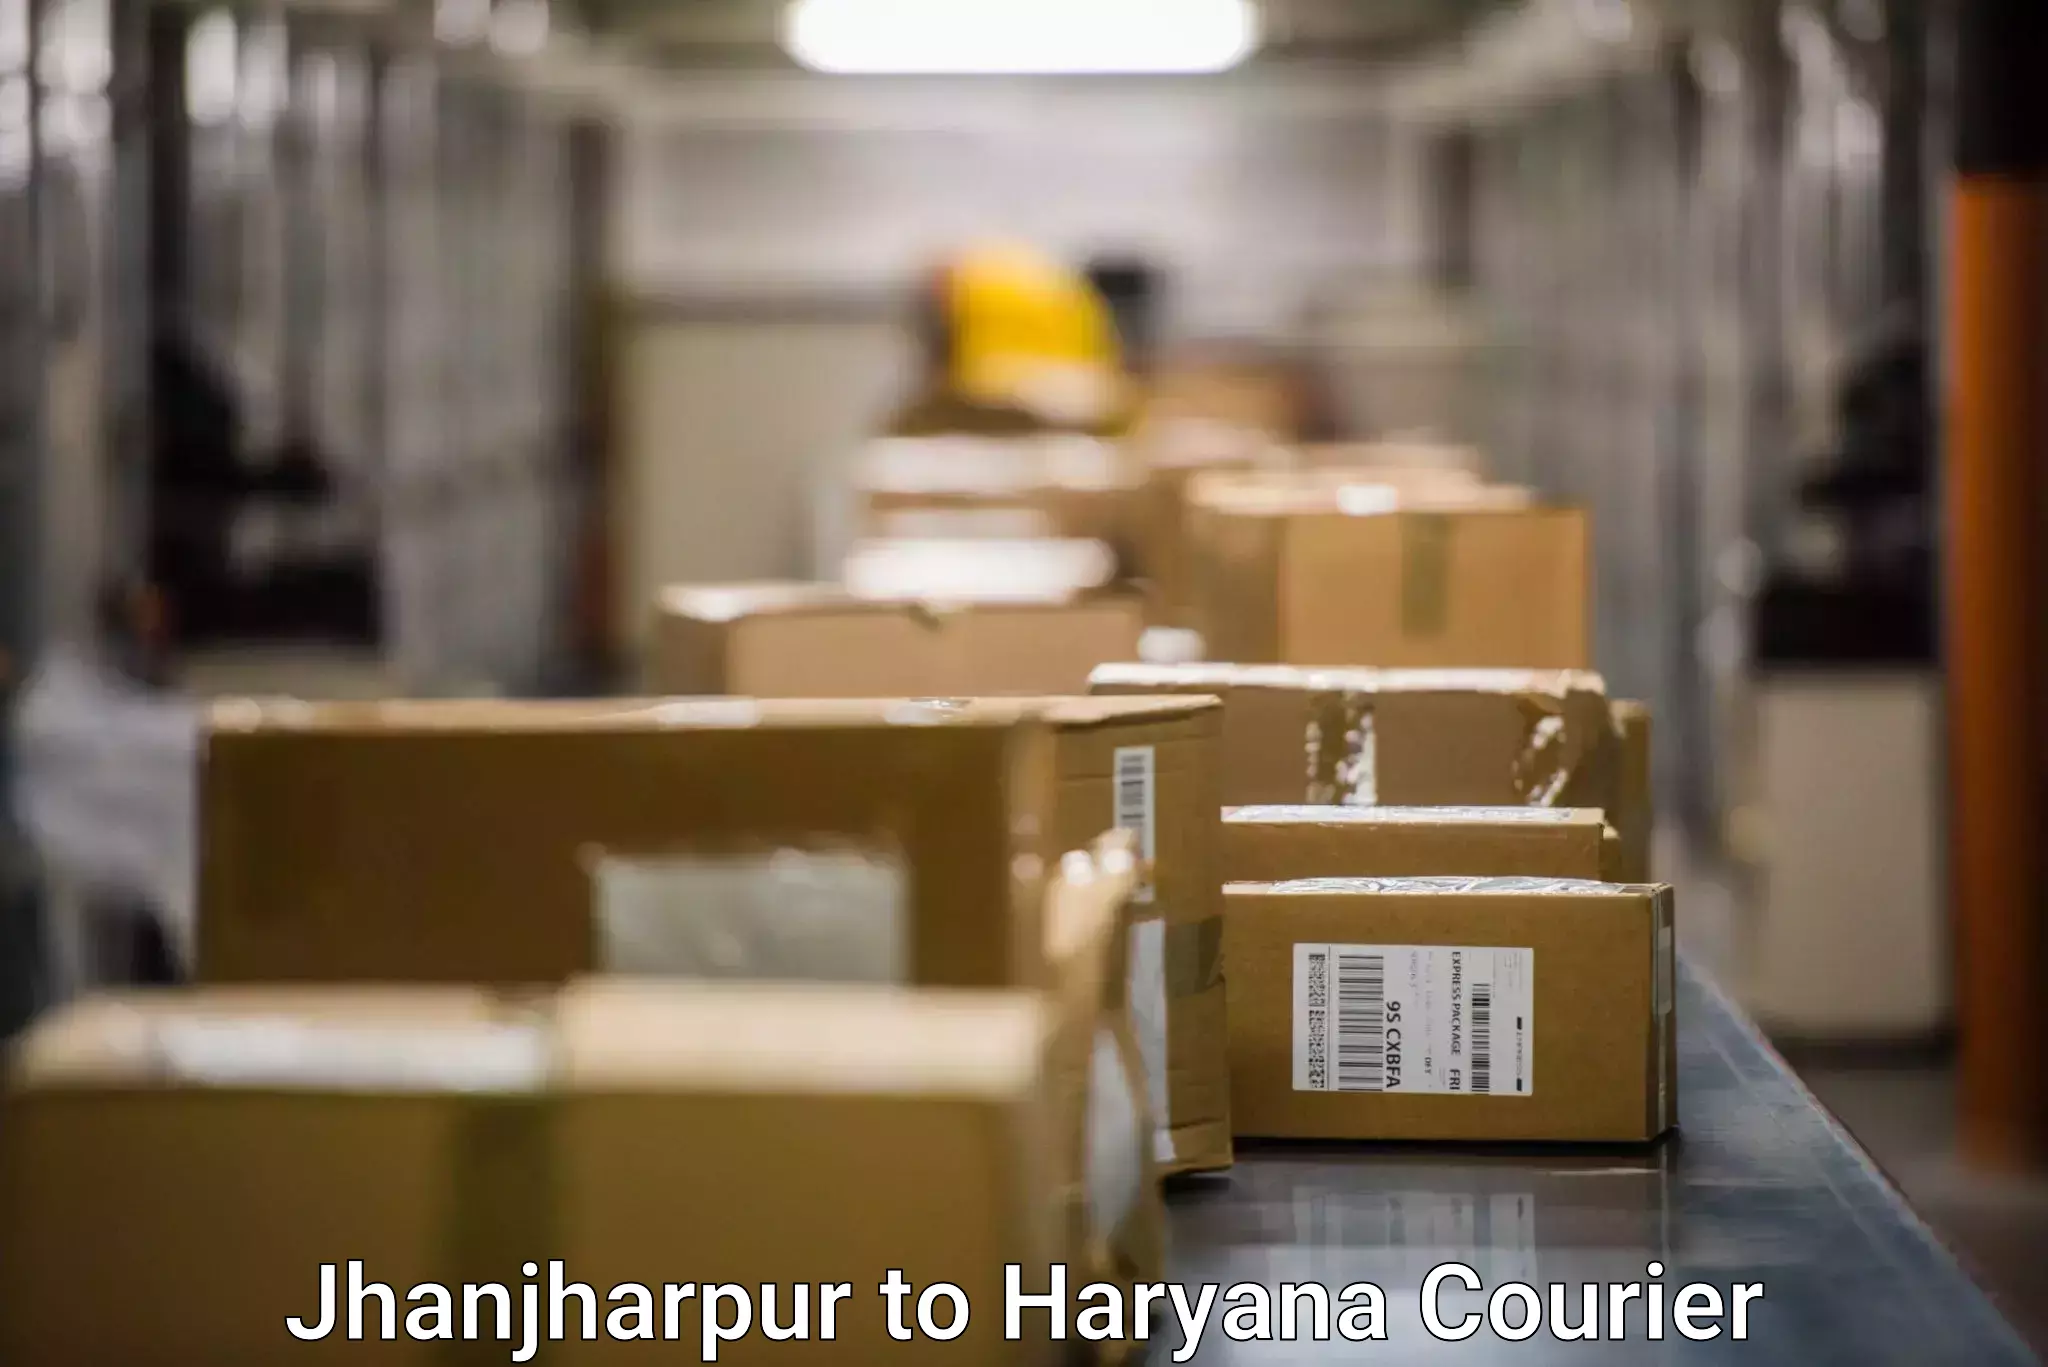 Courier service innovation Jhanjharpur to NIT Kurukshetra